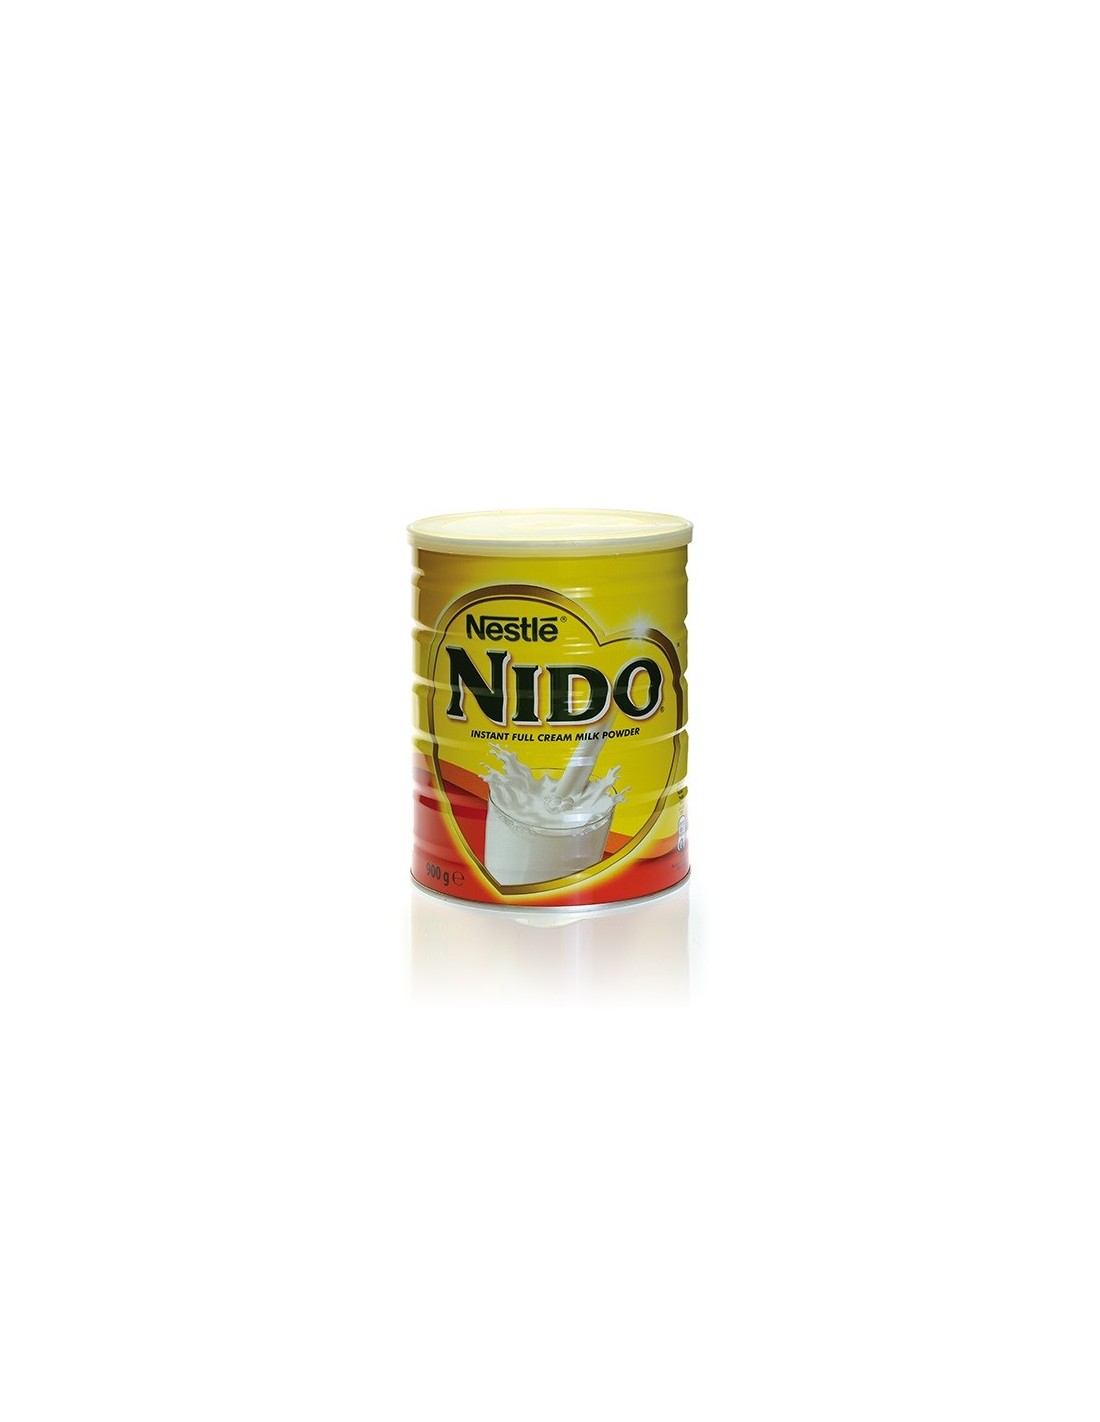 NIDO Milk powder (Milchpulver)900 GR